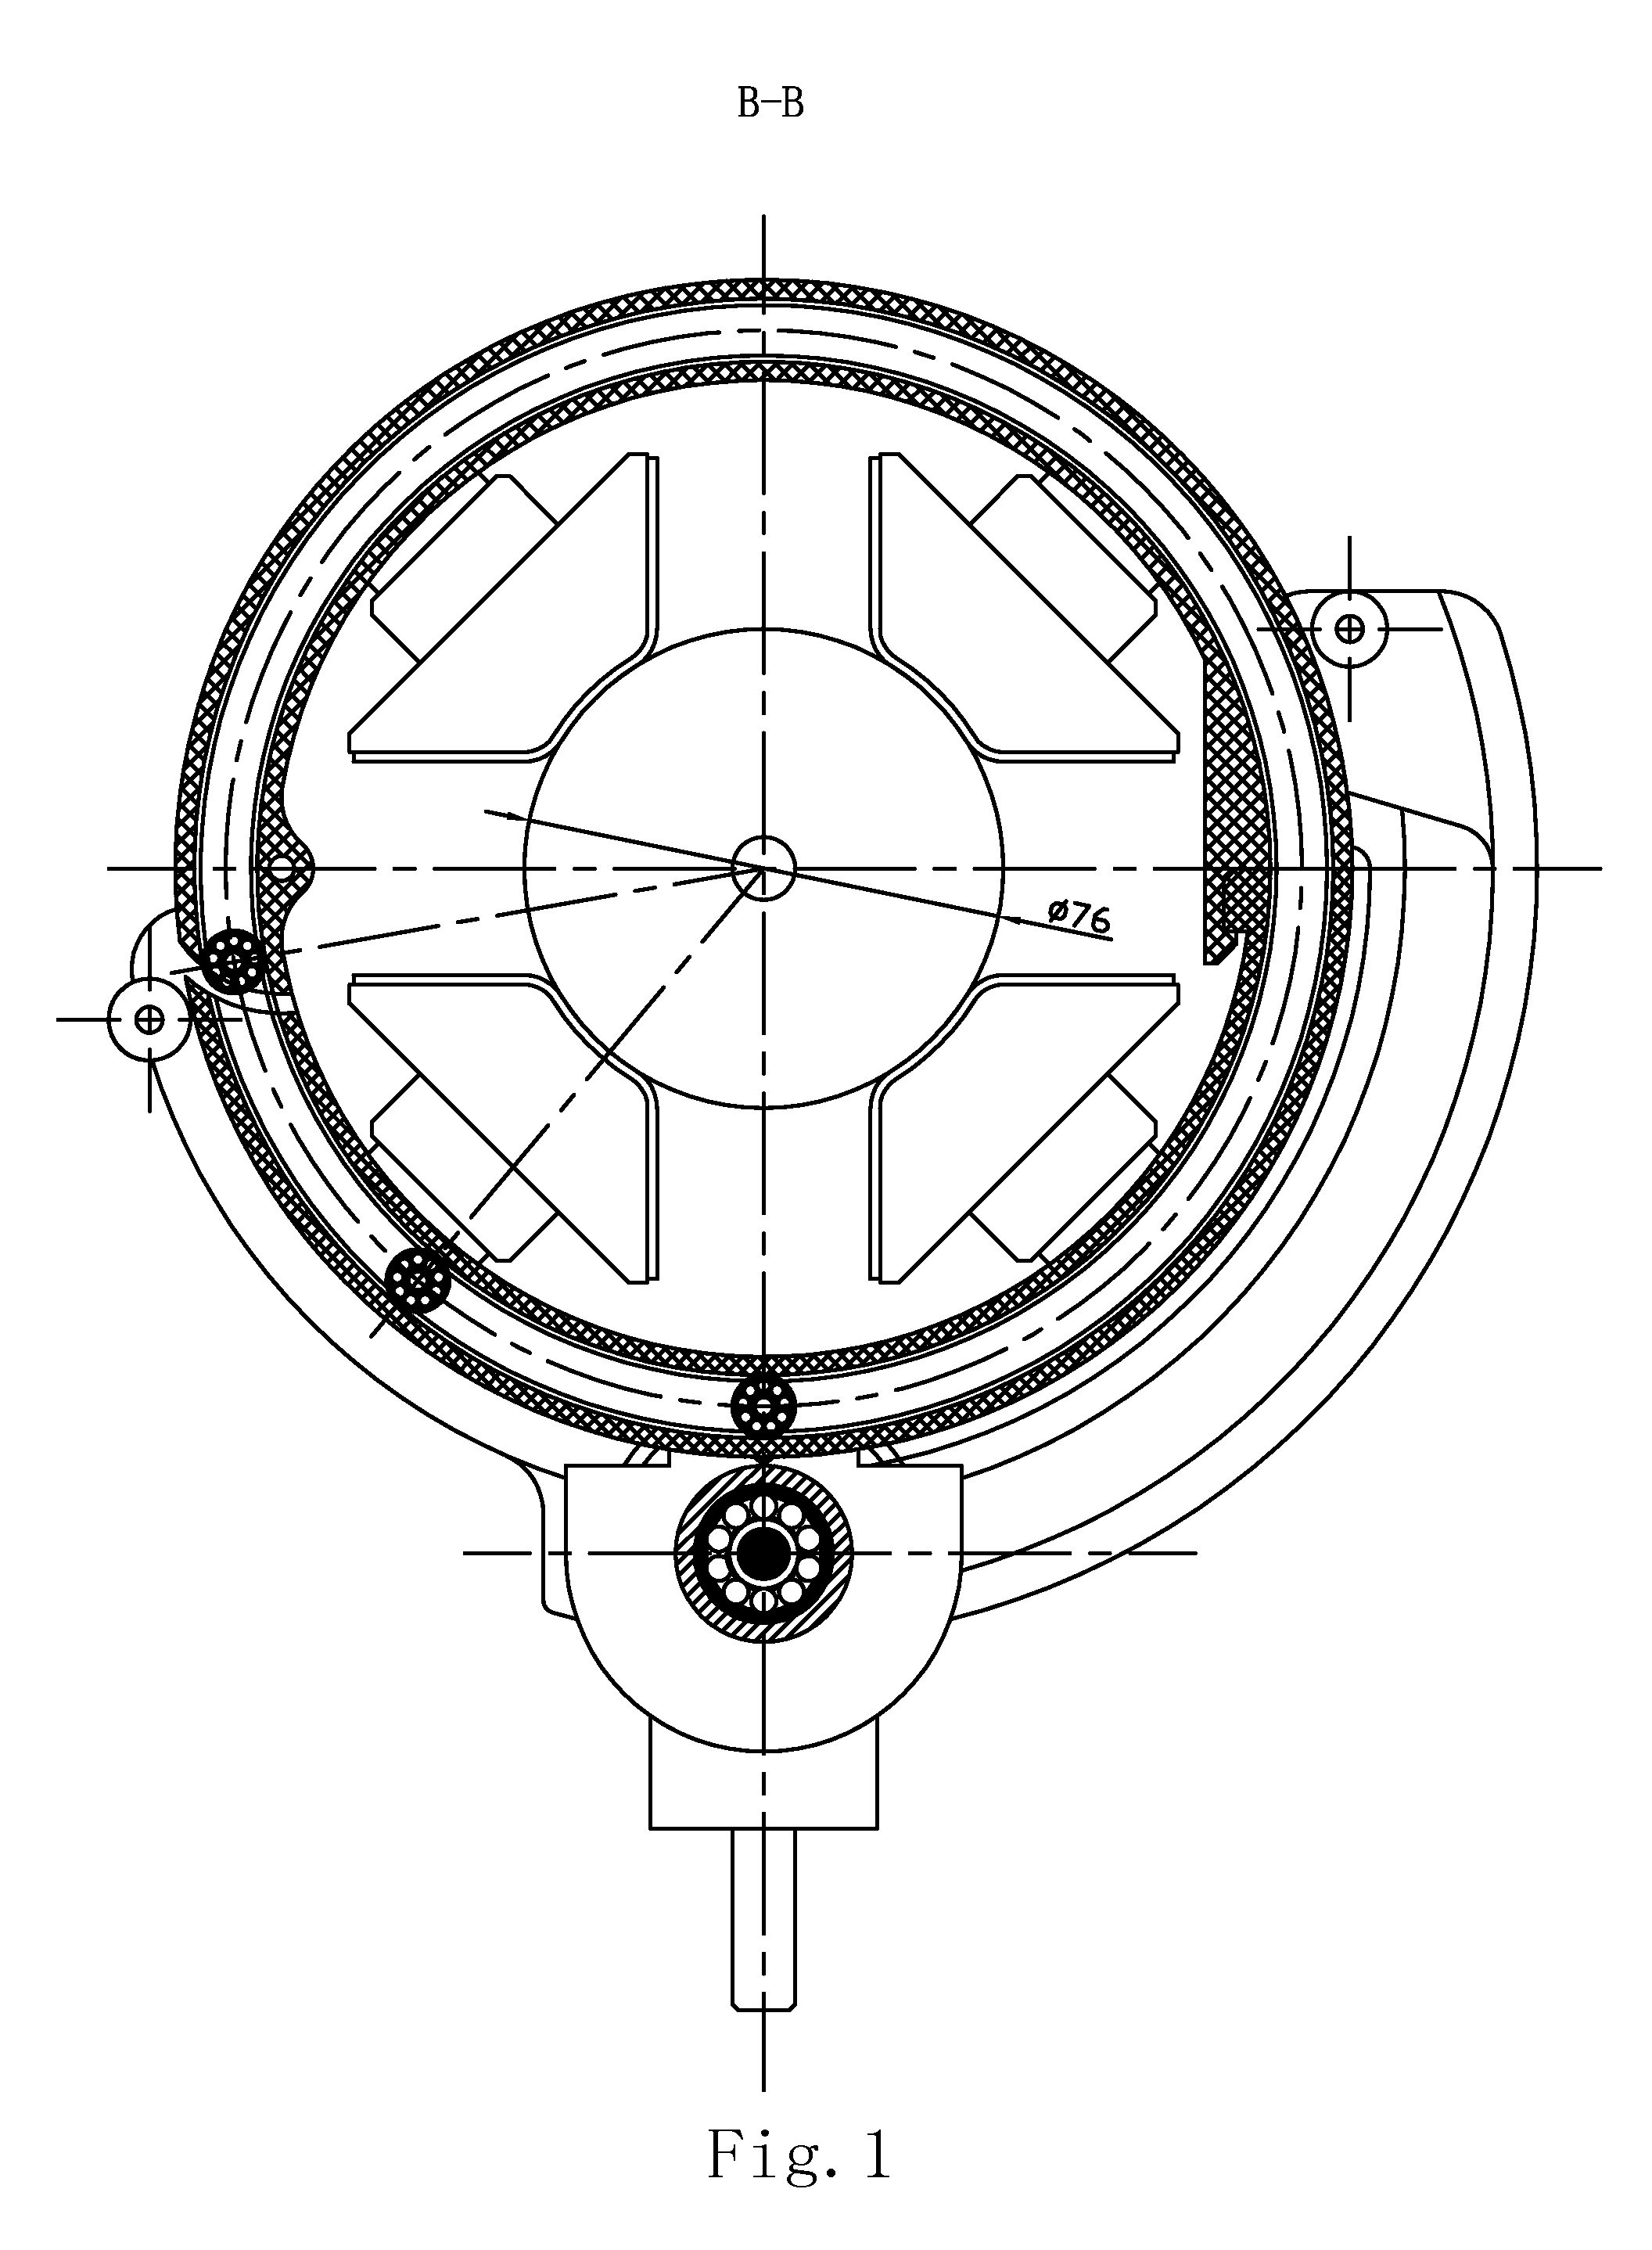 External circular polisher with double polishing wheels